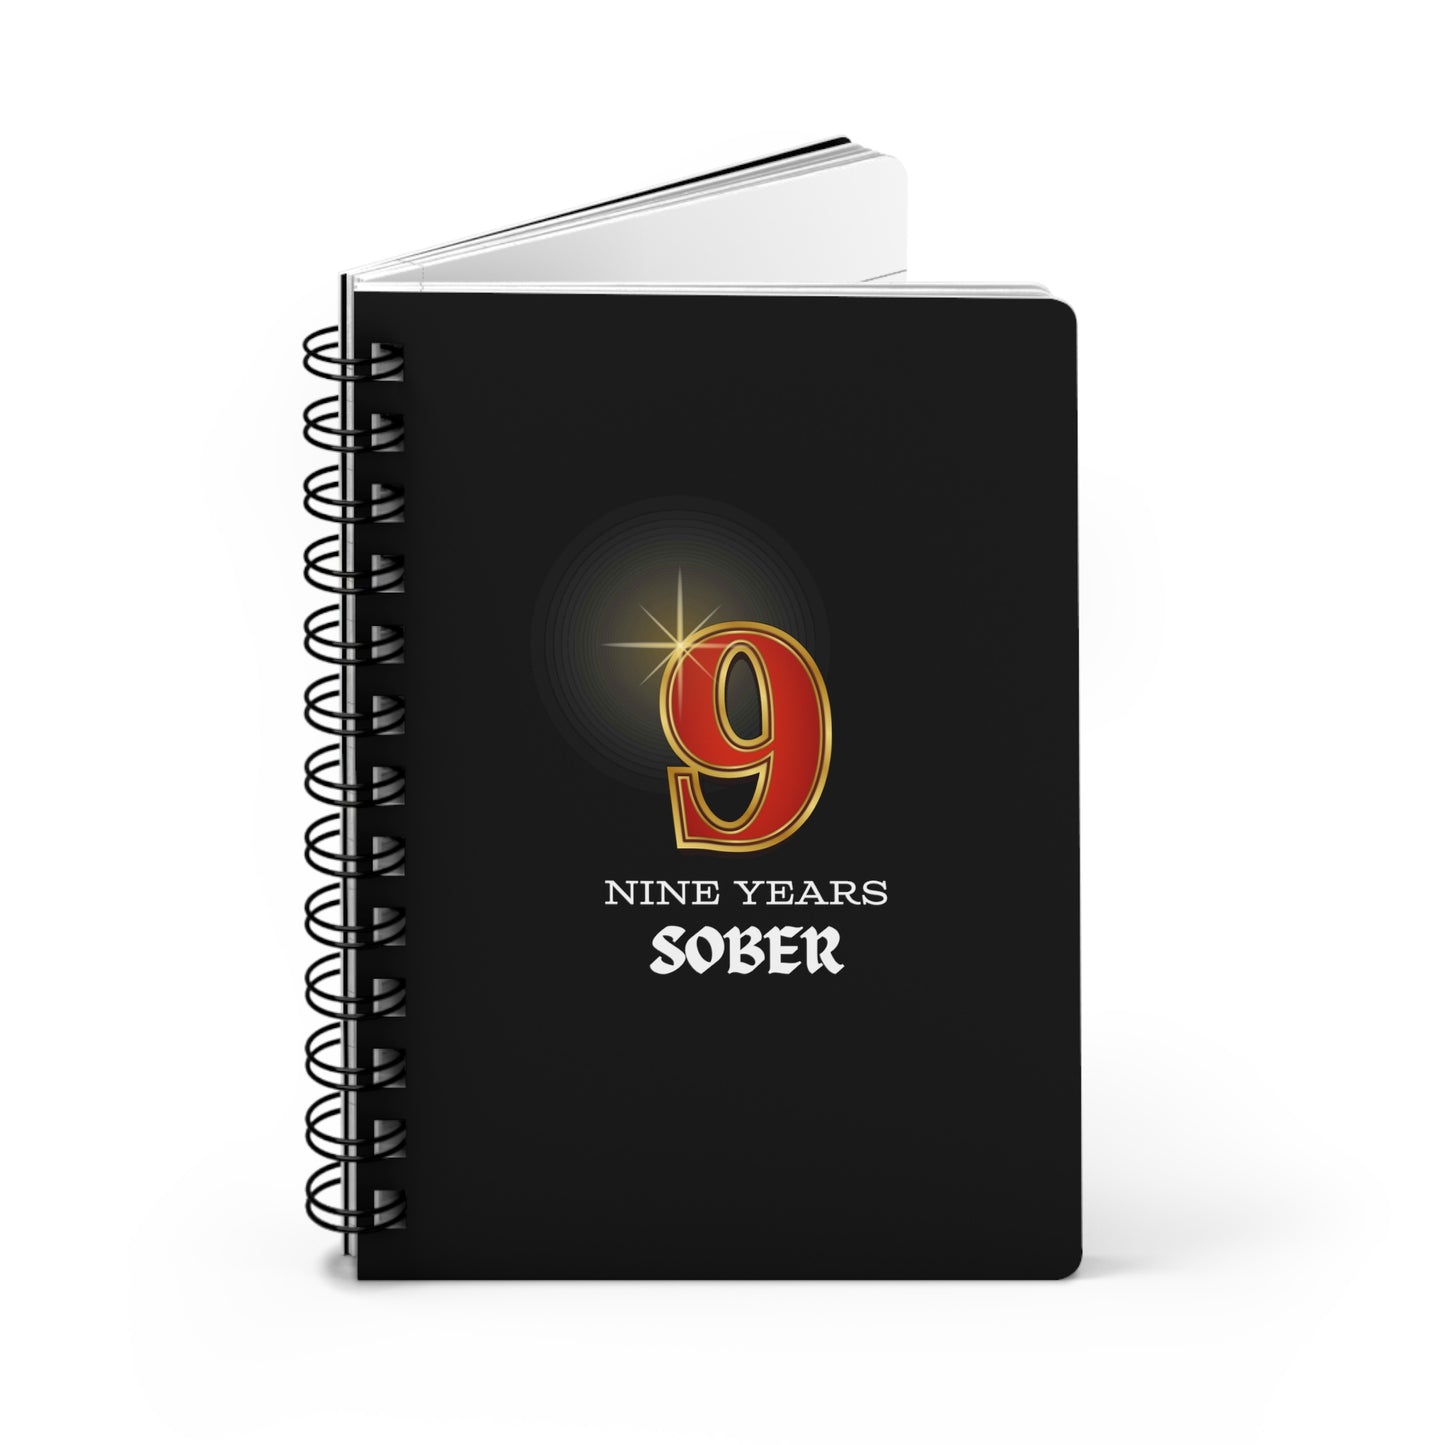 Sober Birthday Journal "Nine Years" Spiral 5 x 7